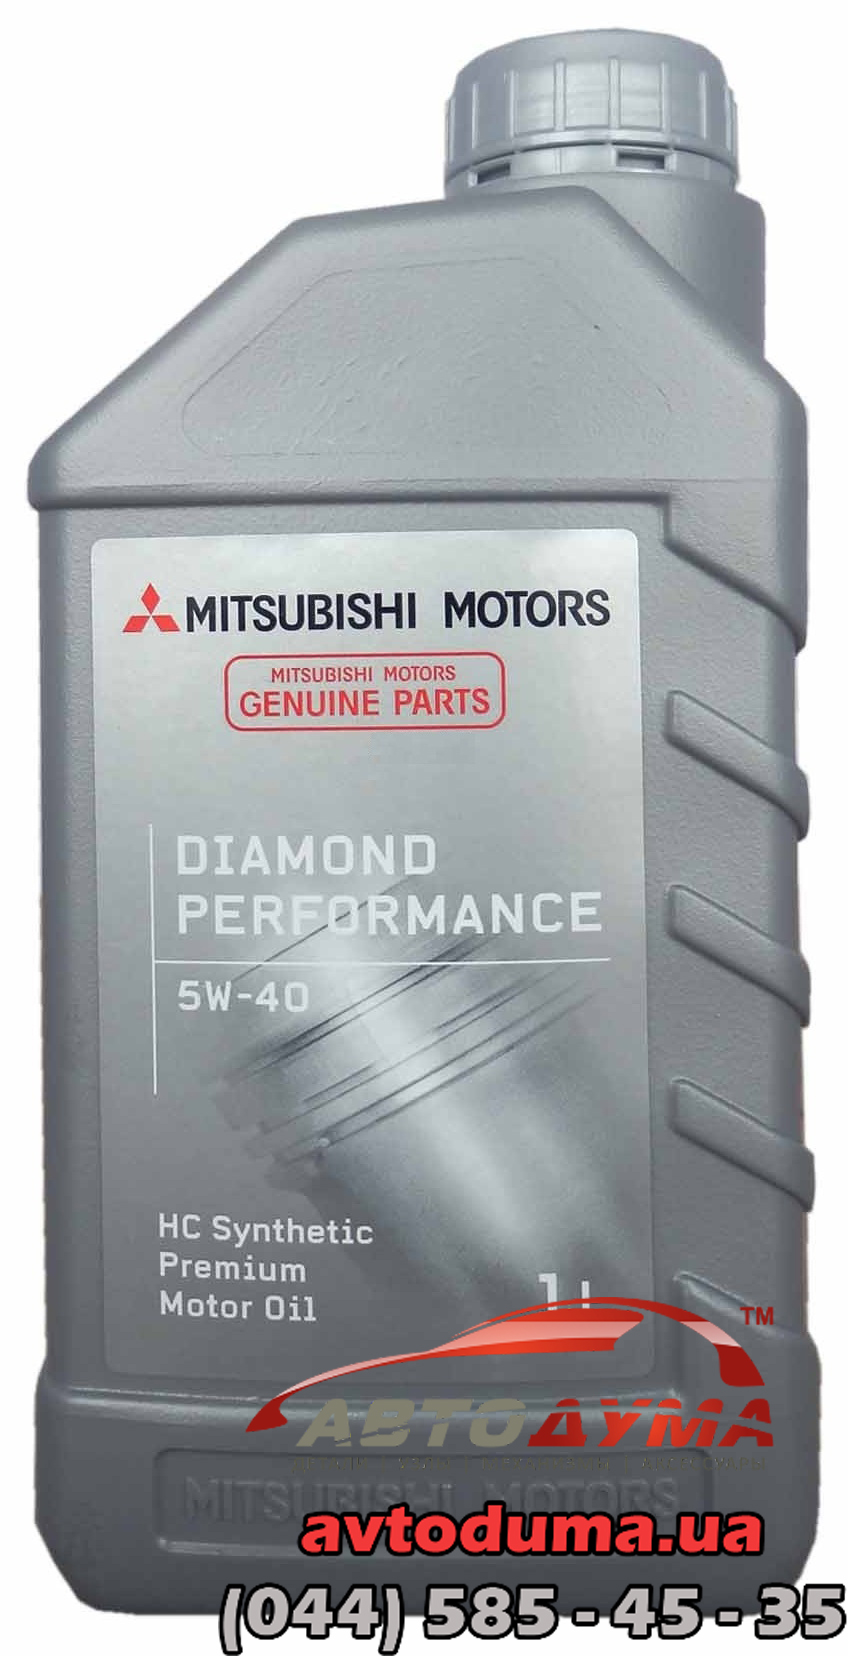 Mitsubishi Diamond Performance 5W-40, 1л